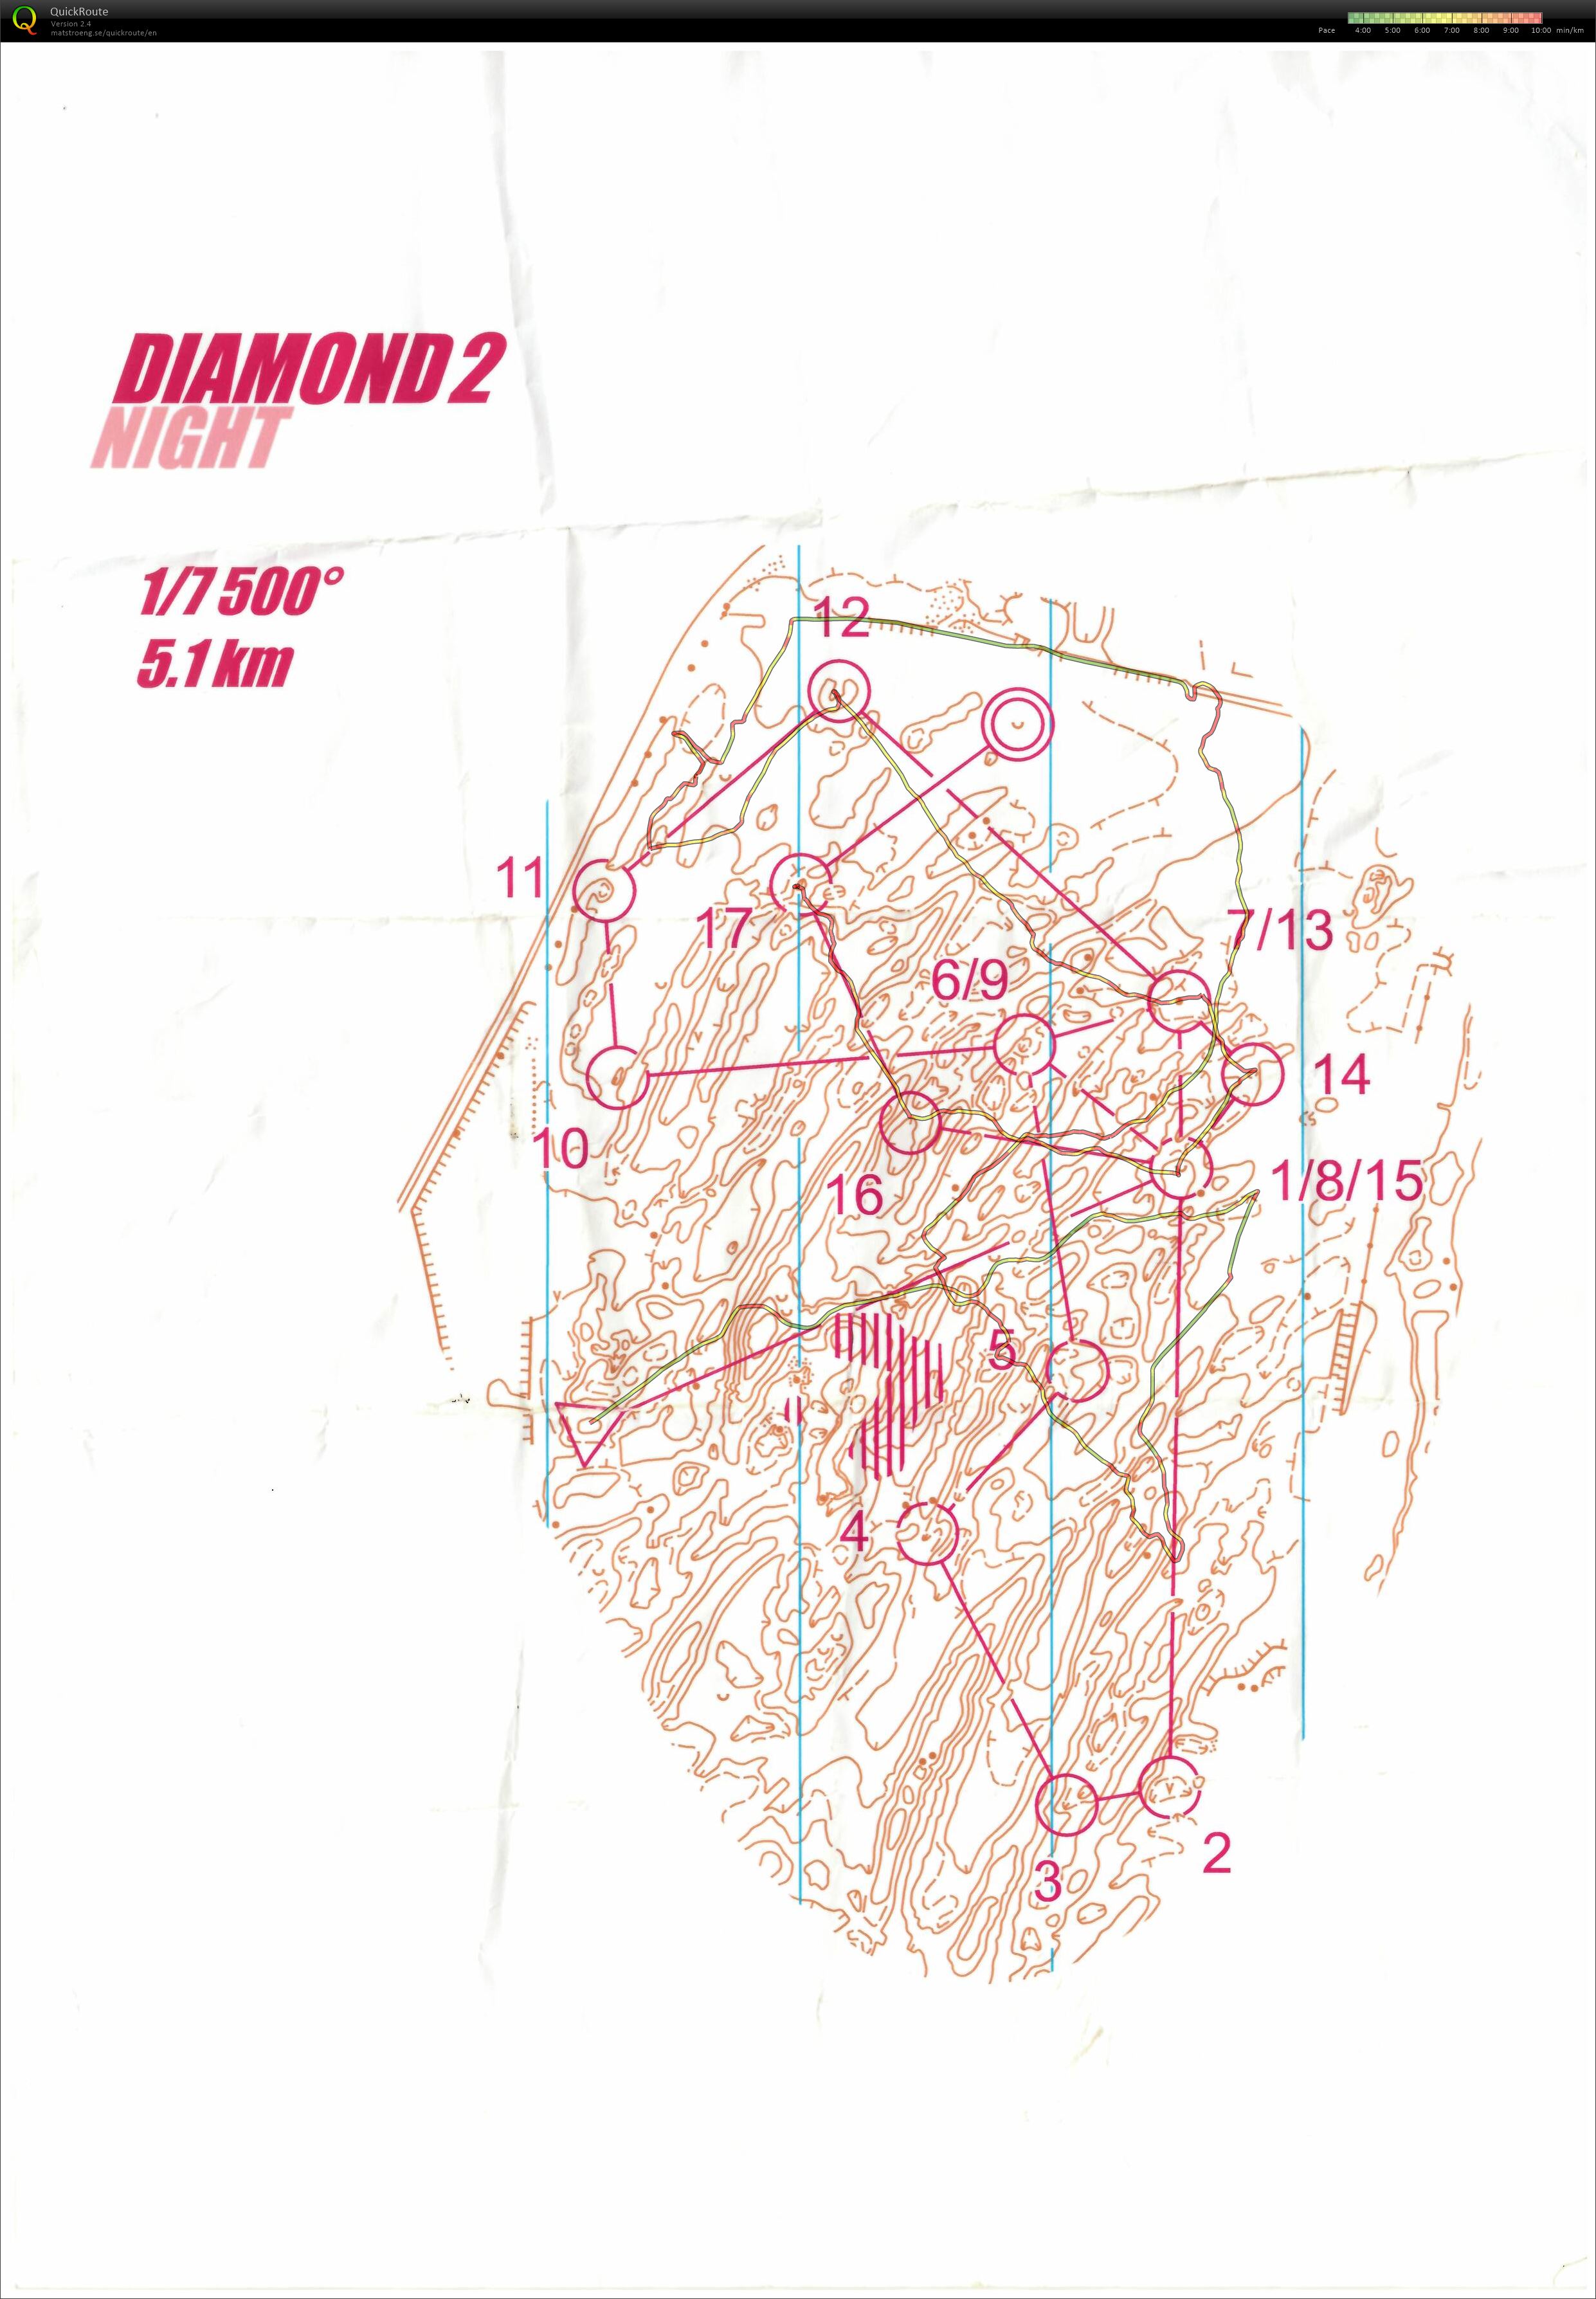 Diamond #1 Getting Lost (04-01-2019)